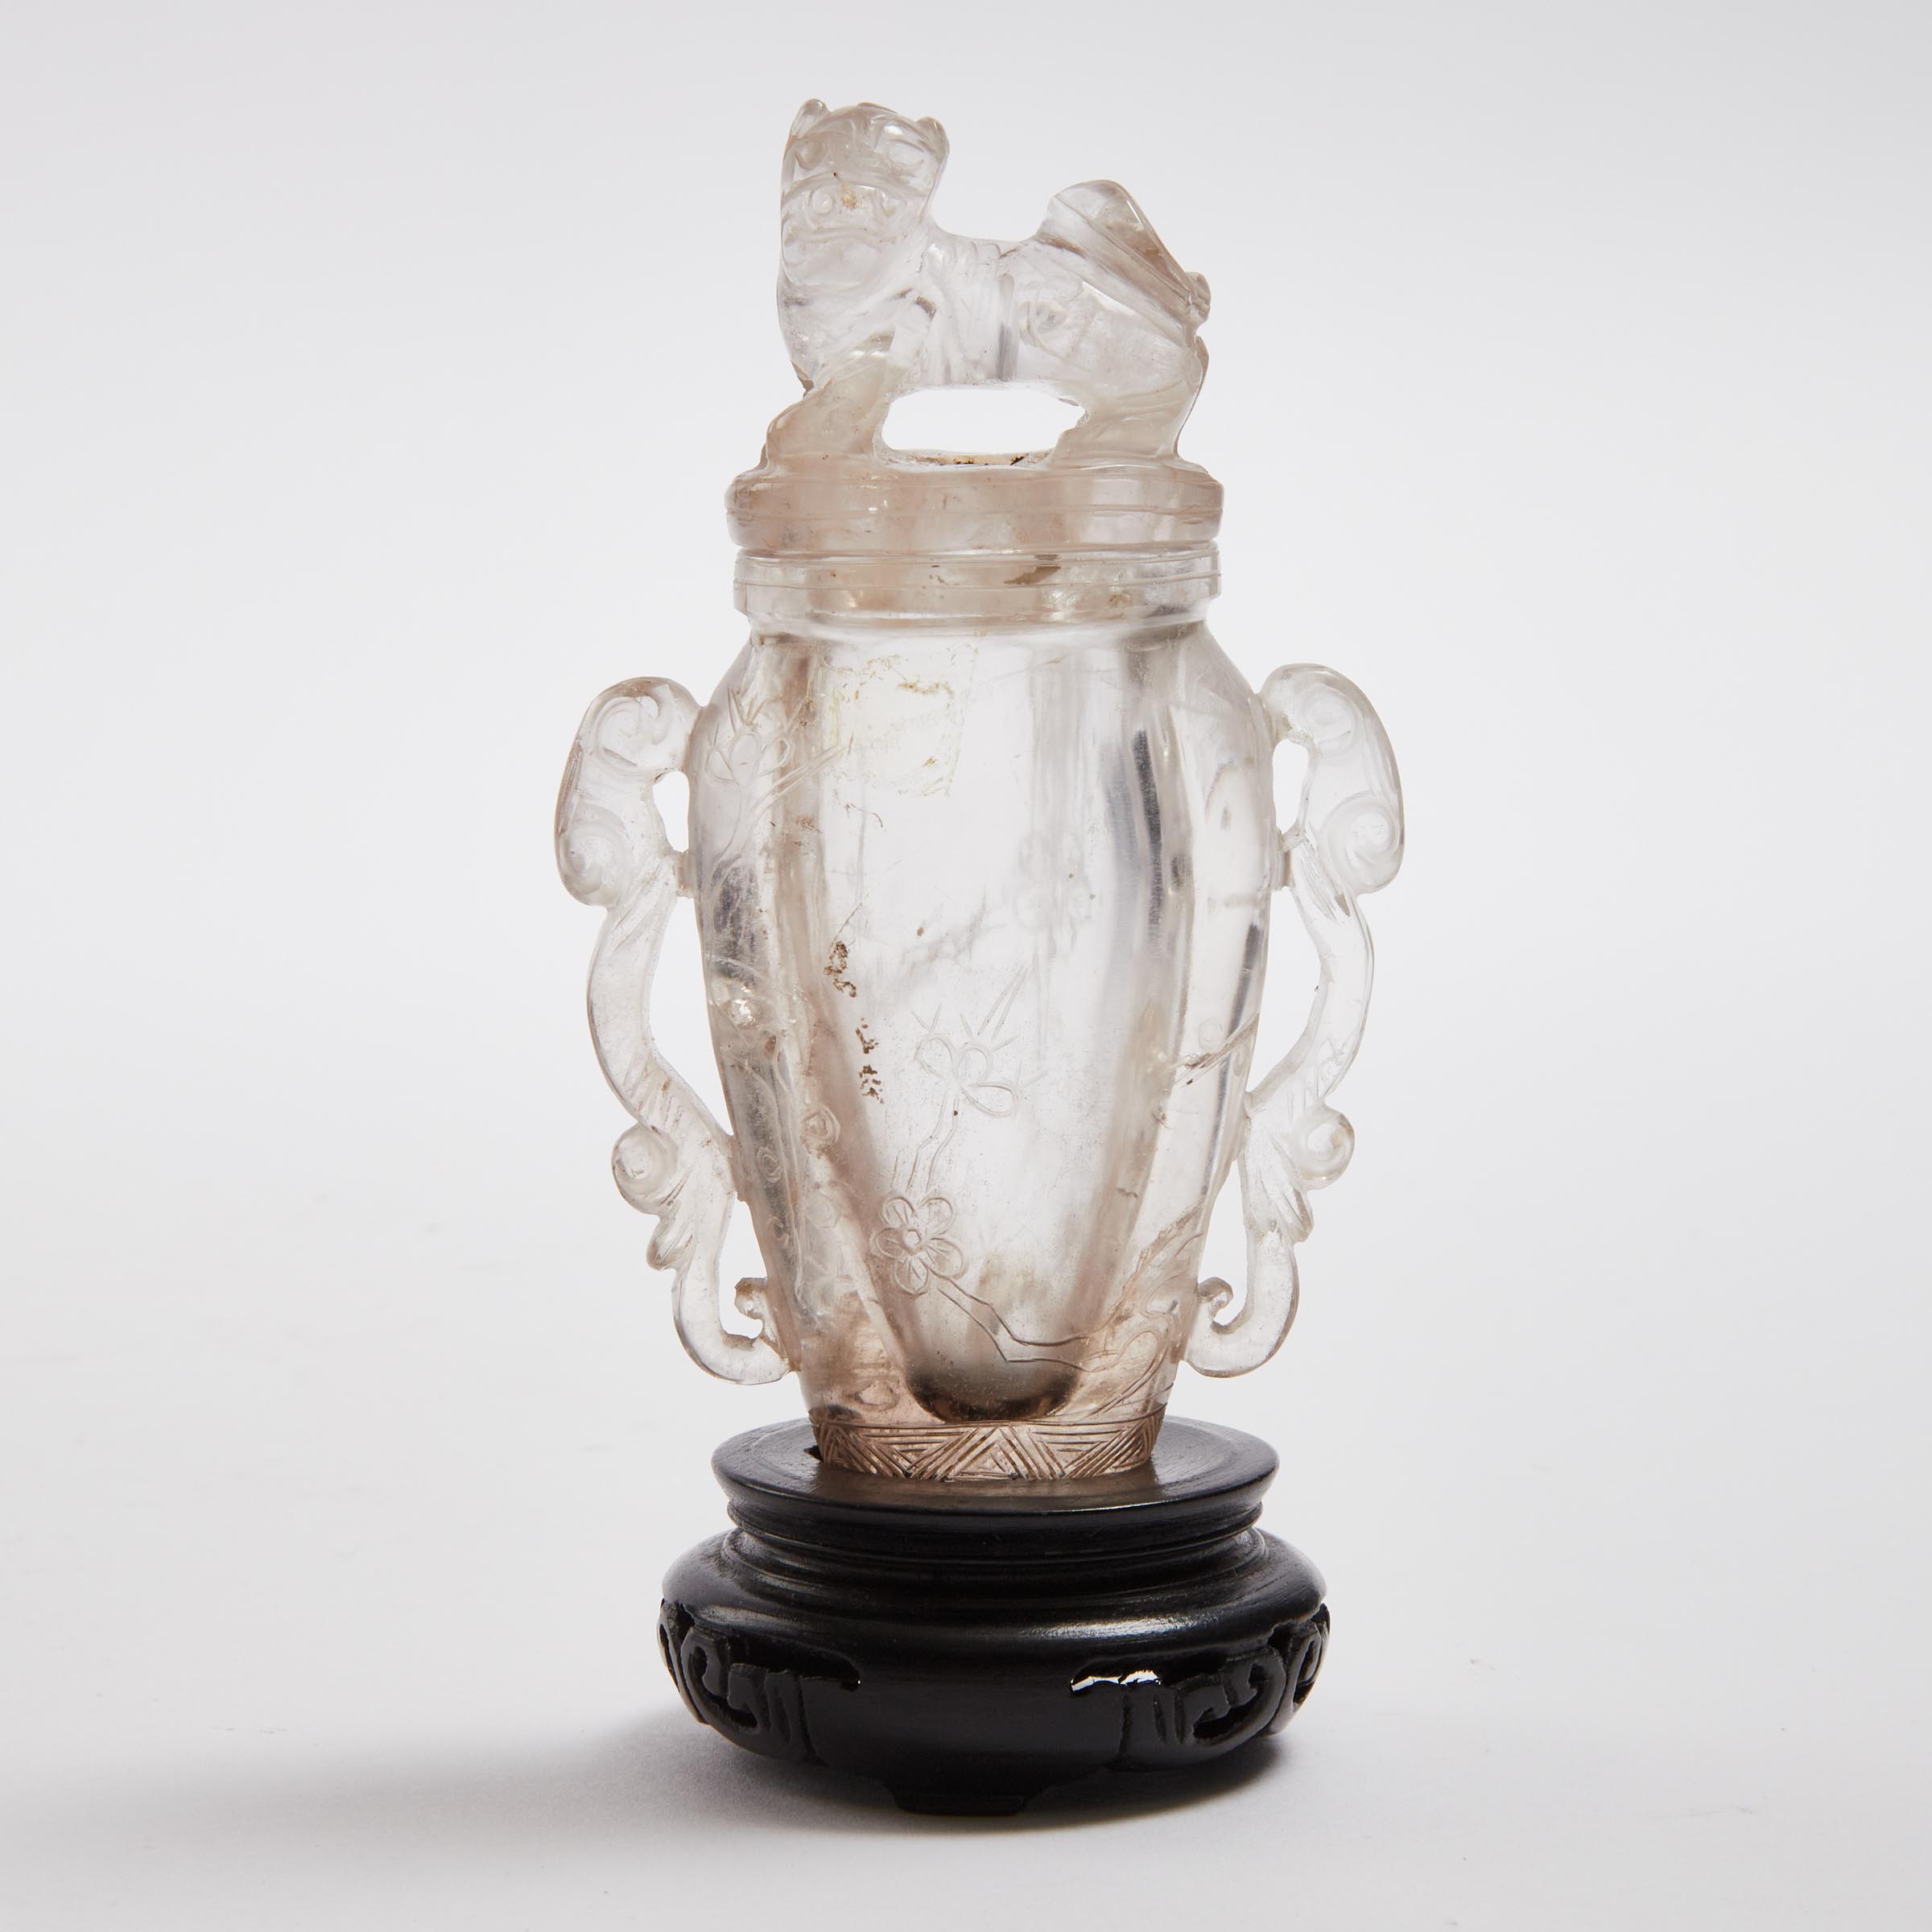 A Miniature Rock Crystal Vase and 3aad16